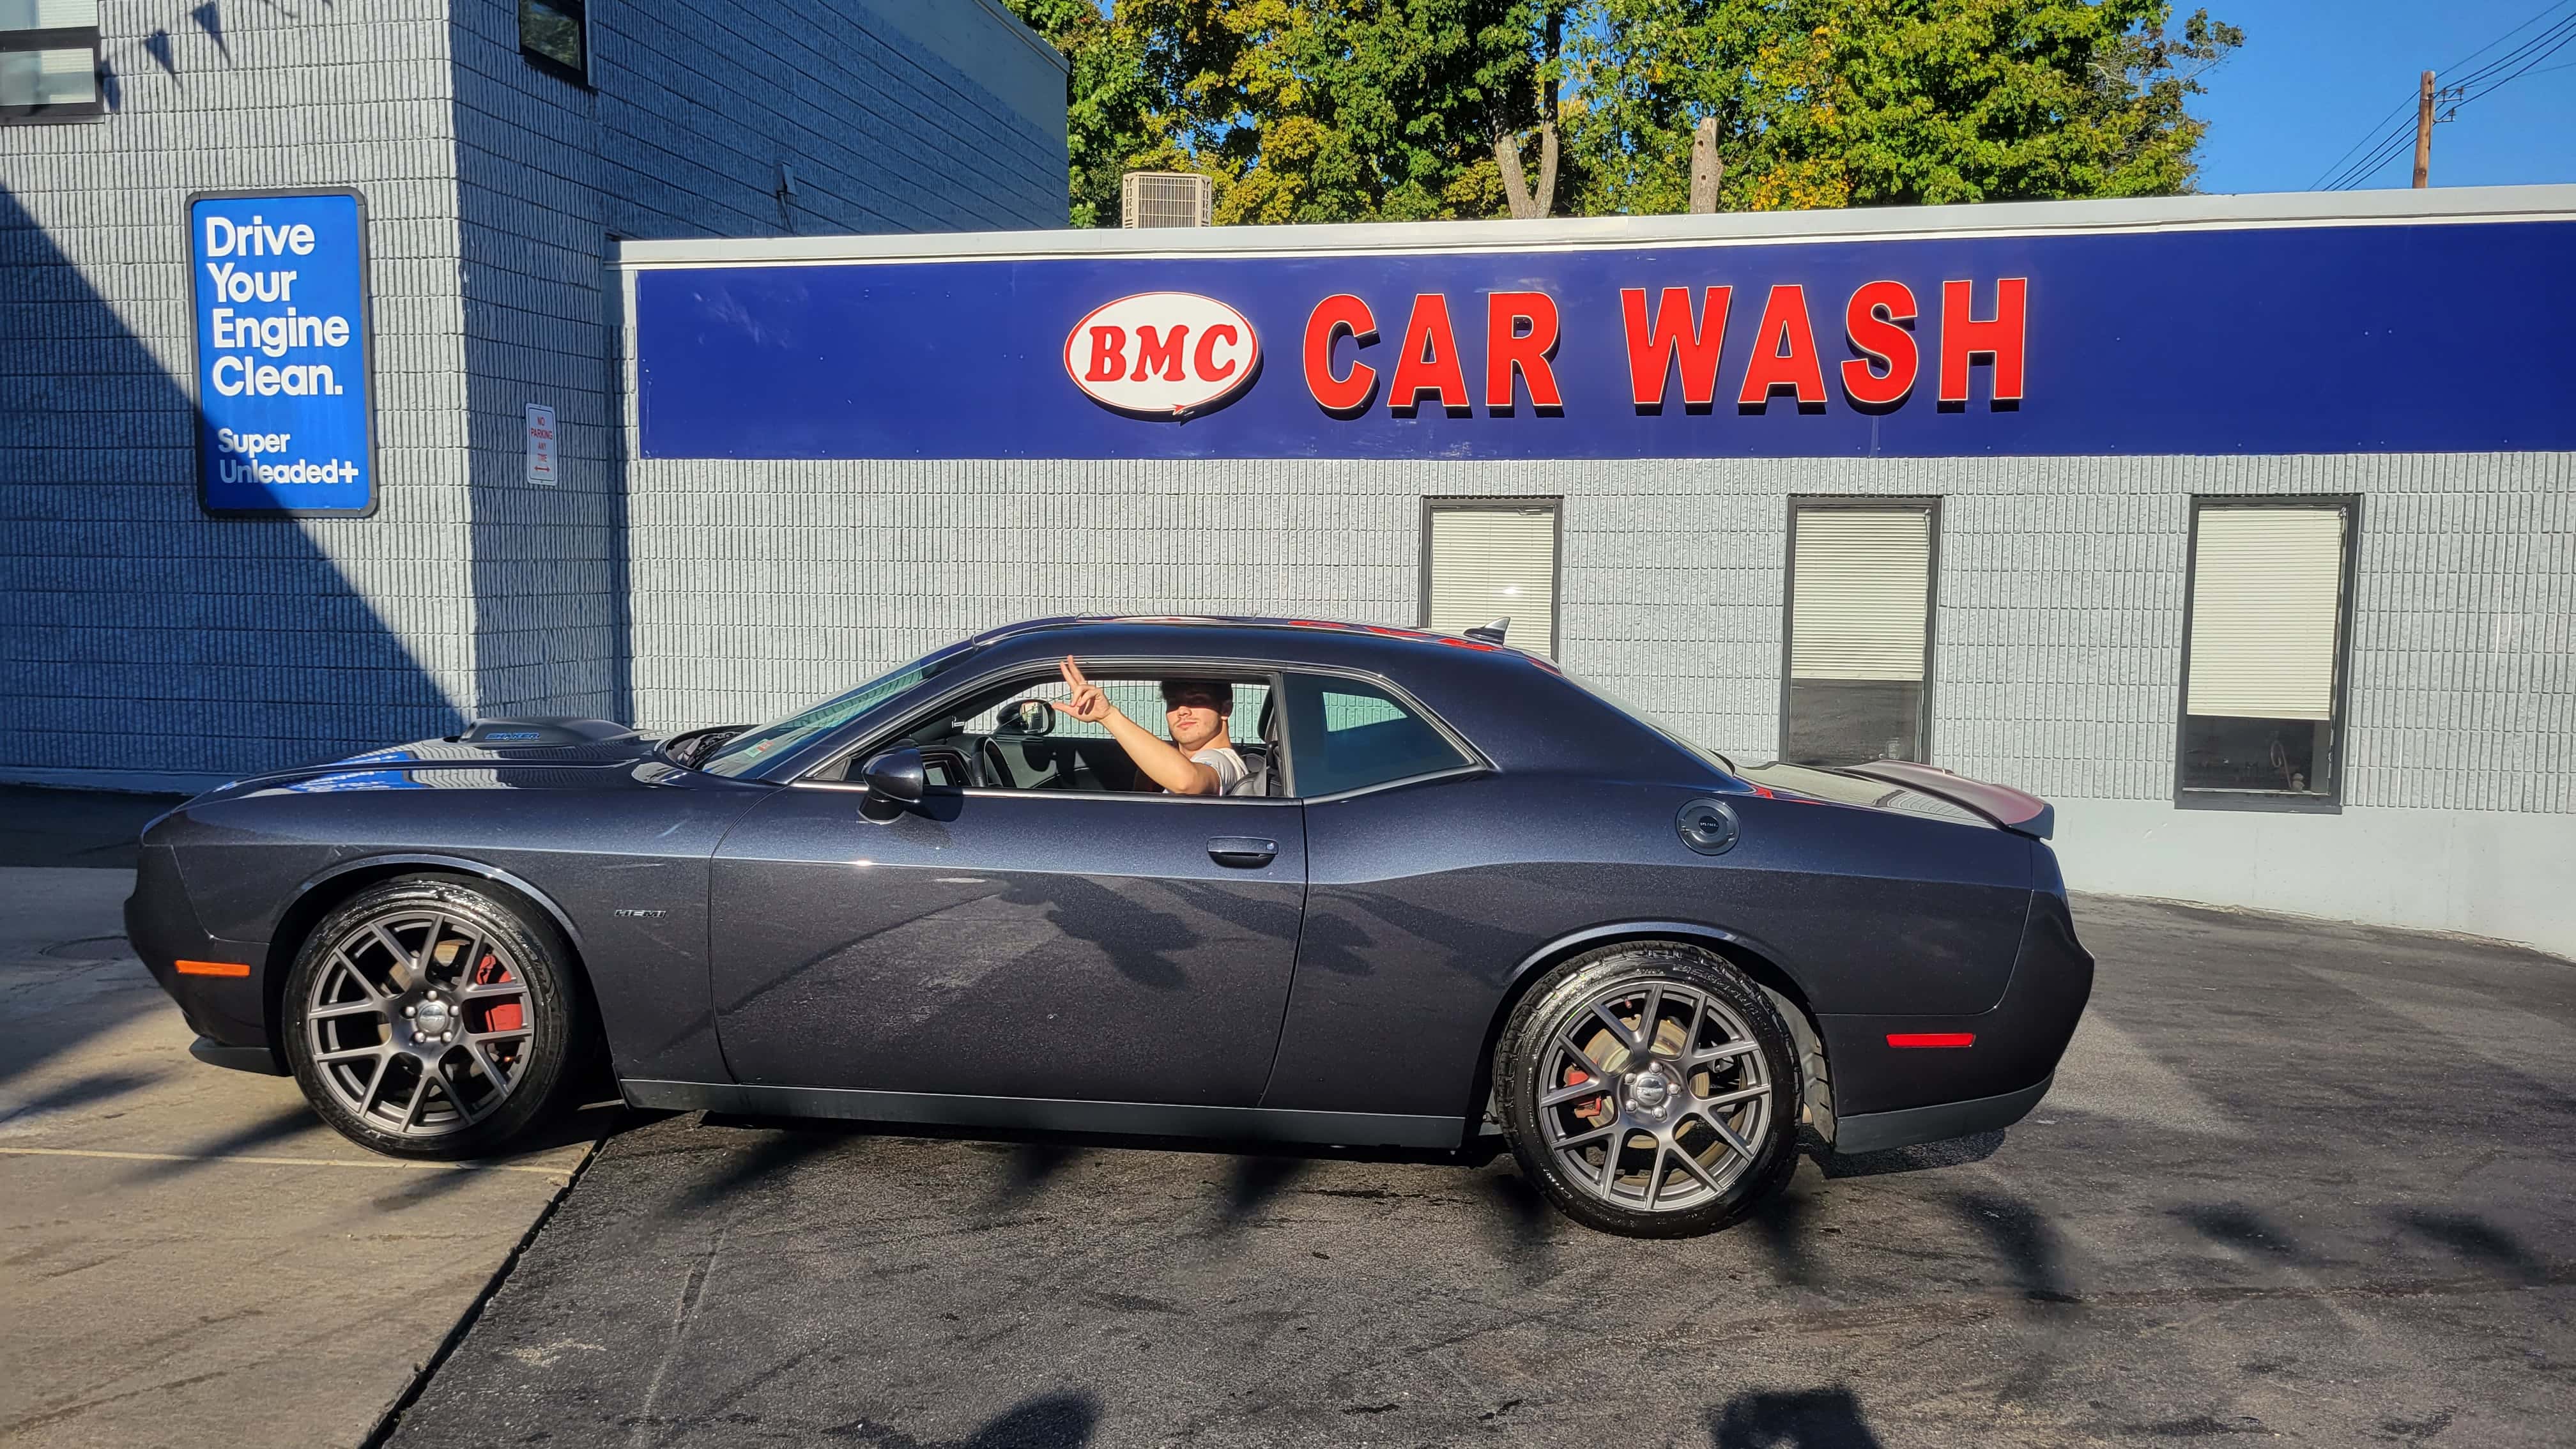 BMC CAR WASH - Johnston, RI, US, touchless car wash